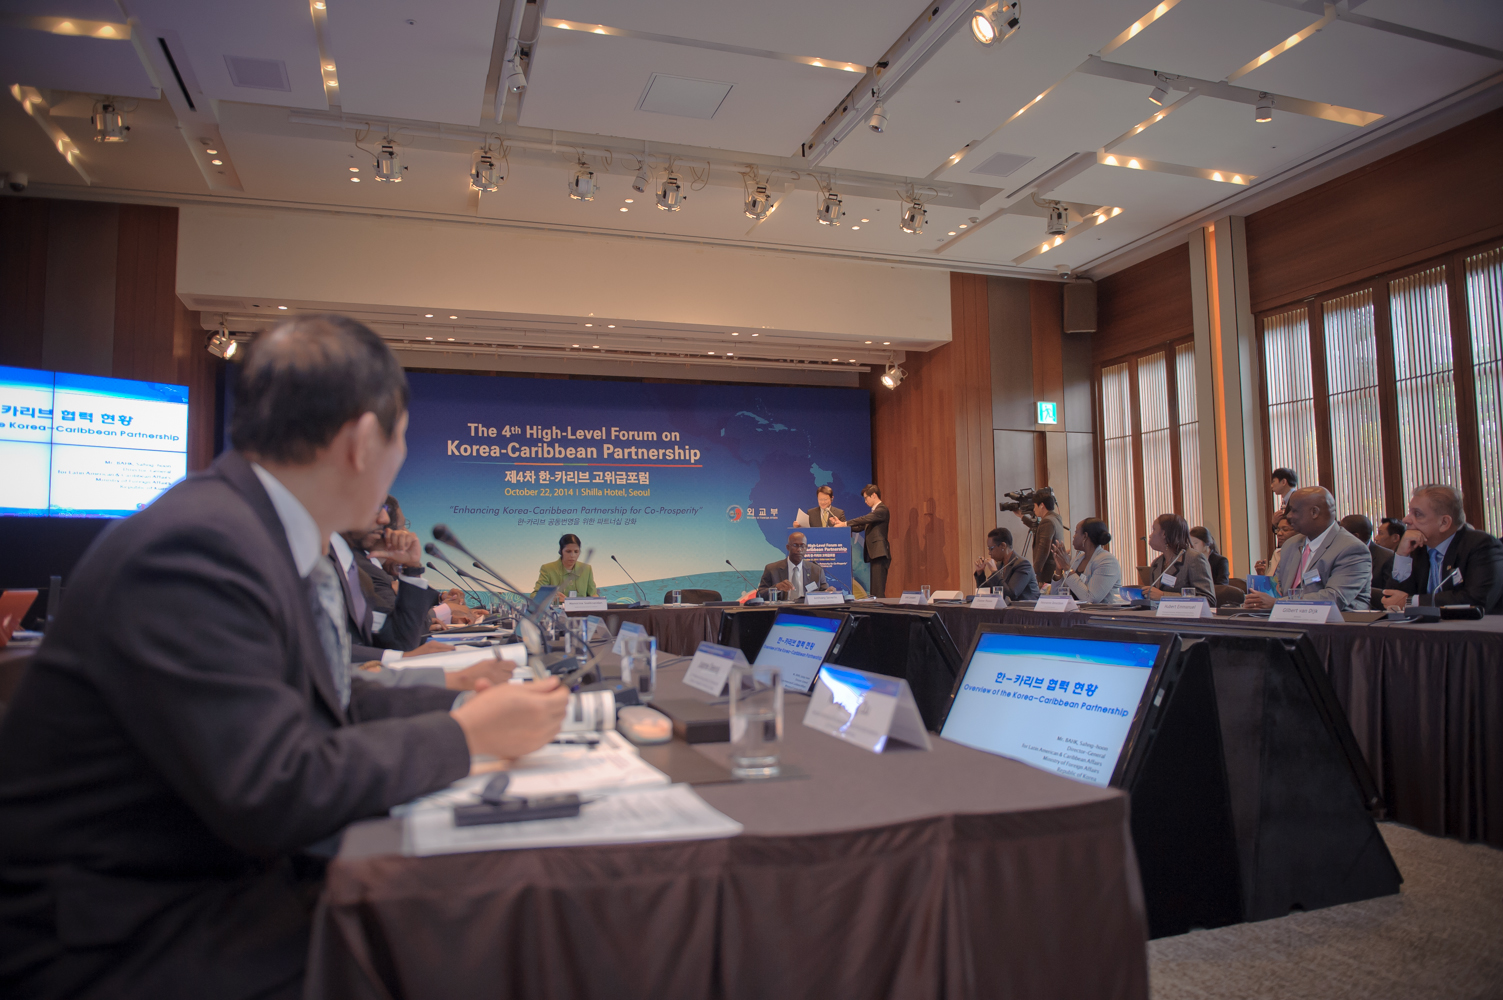 The 4th High-Level Forum on Korea-Caribbean Partnership